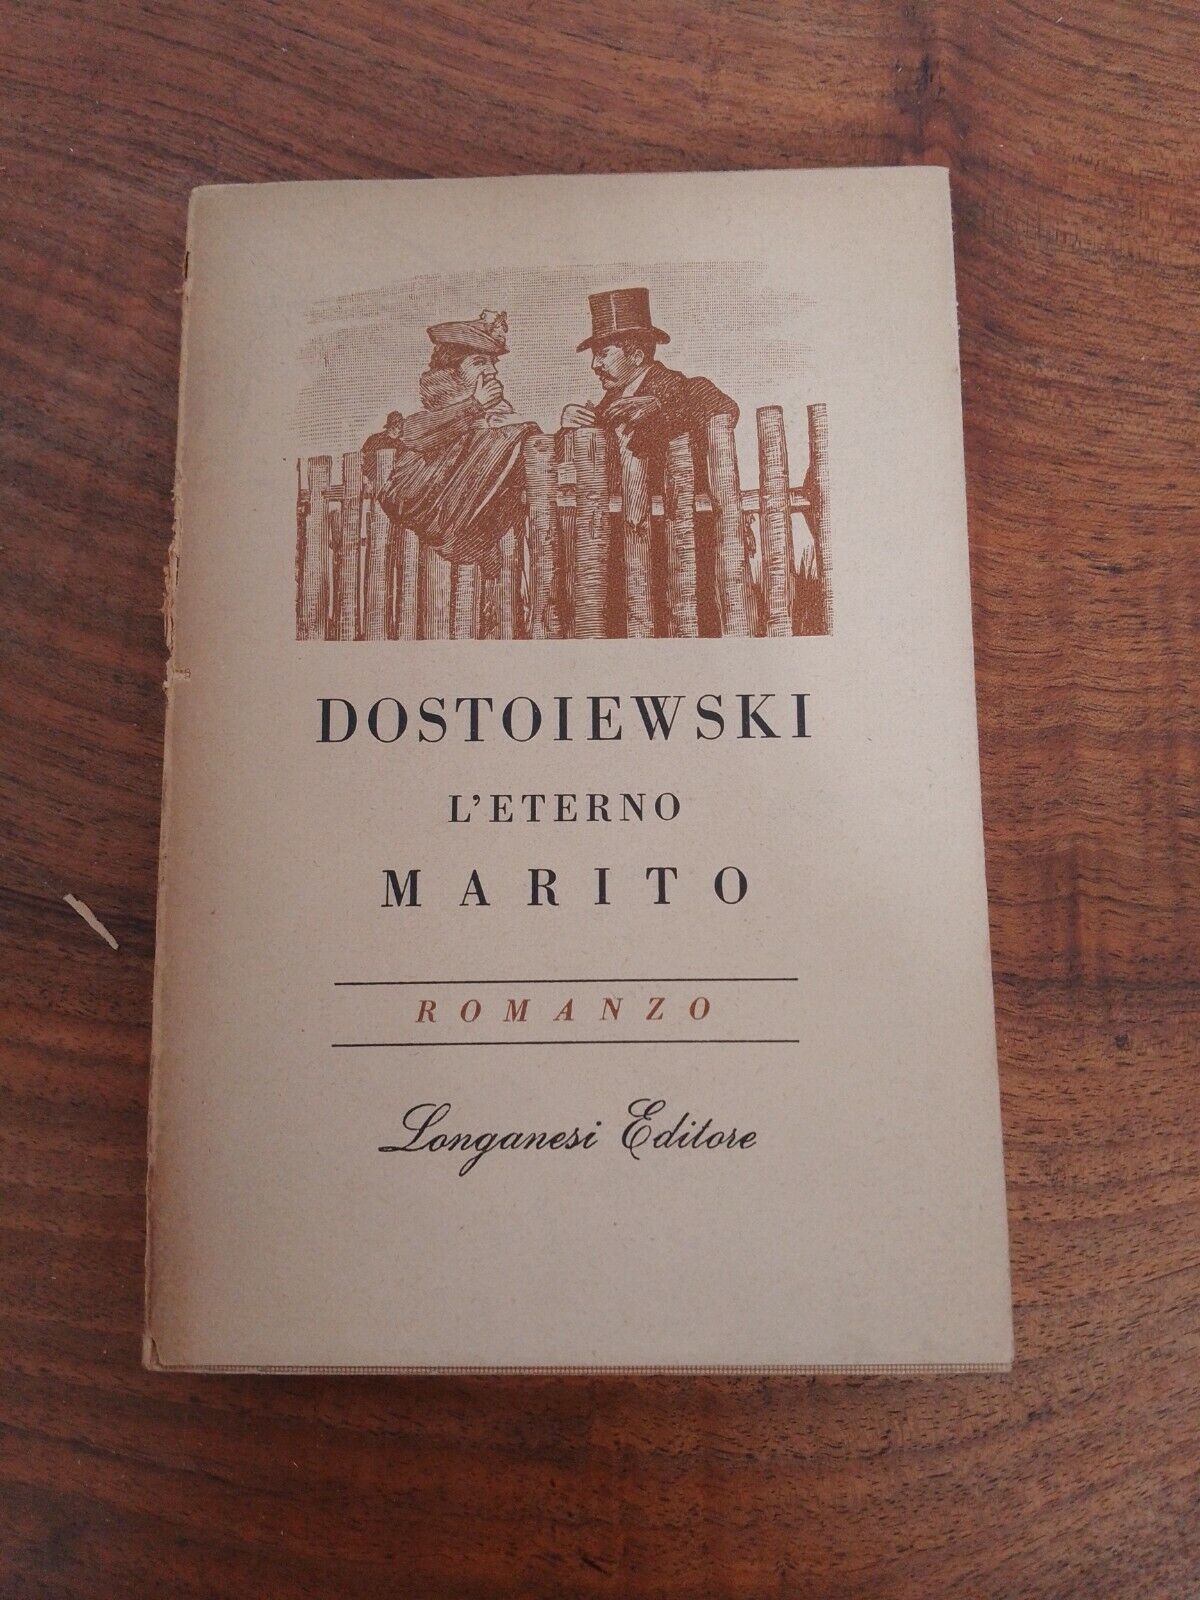 L'ETERNO MARITO, F. Dostoiewski, Longanesi, 1942